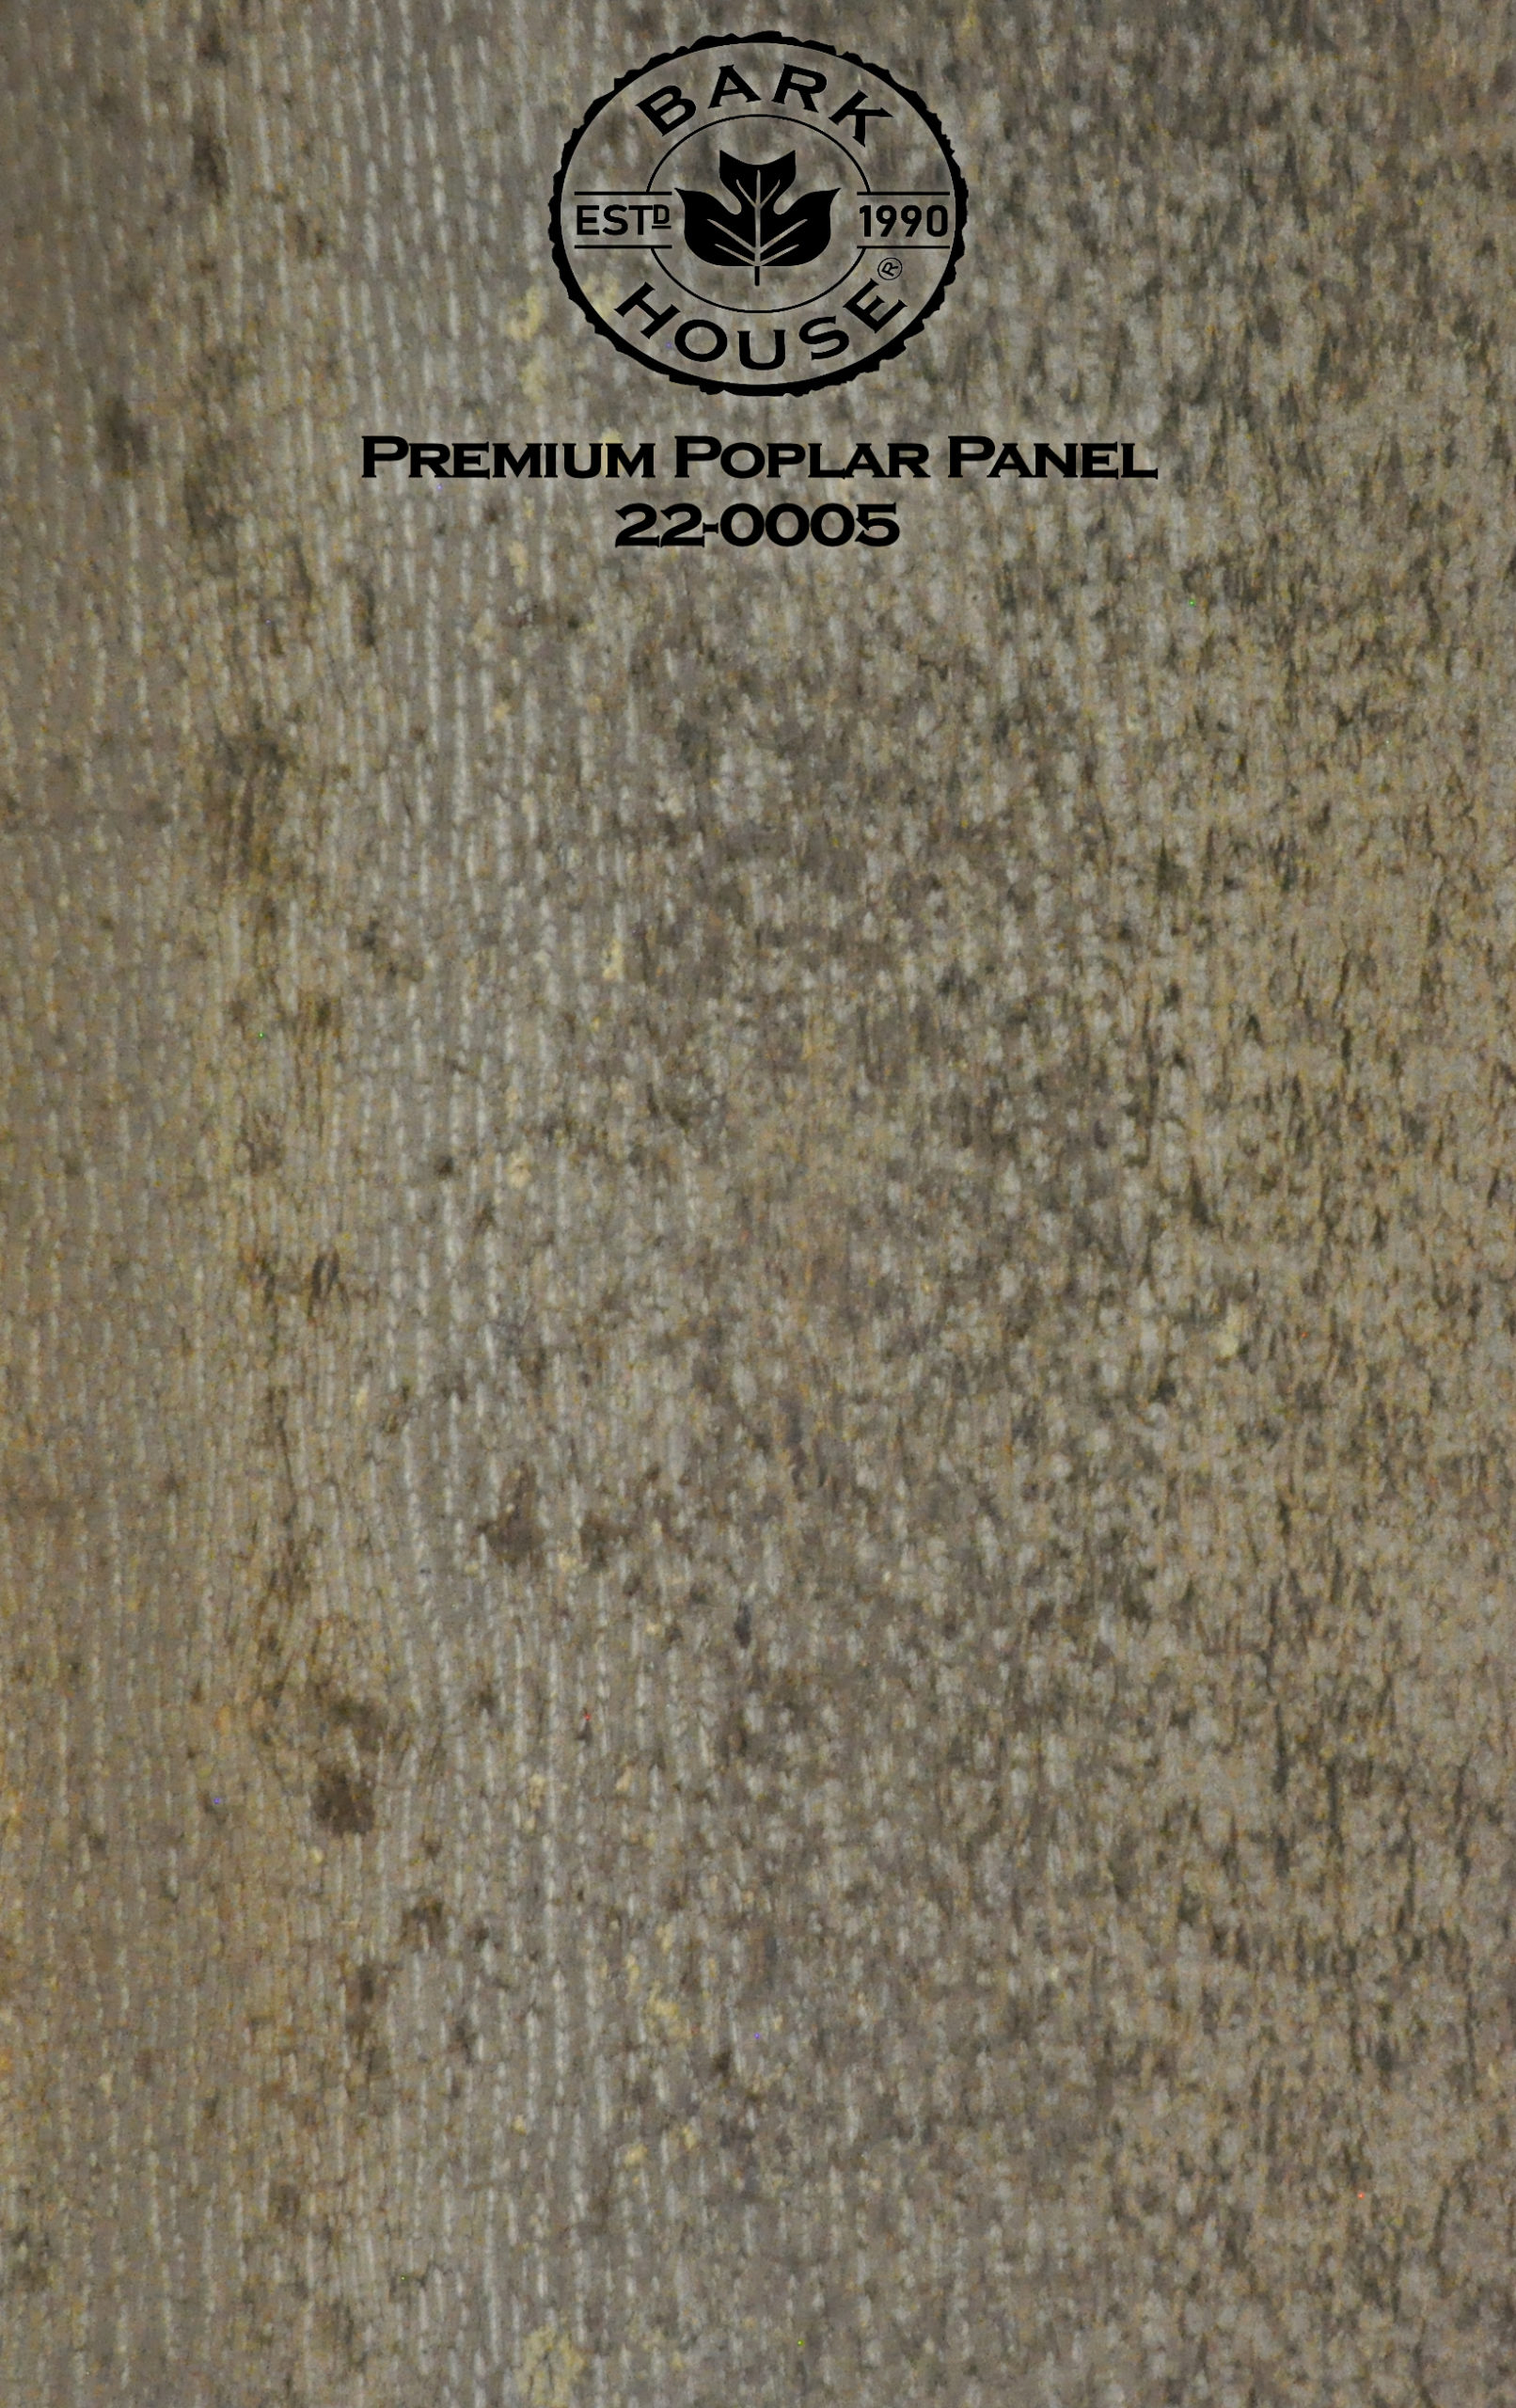 Bark House poplar bark panel SKU POPP-PRE-22-0005